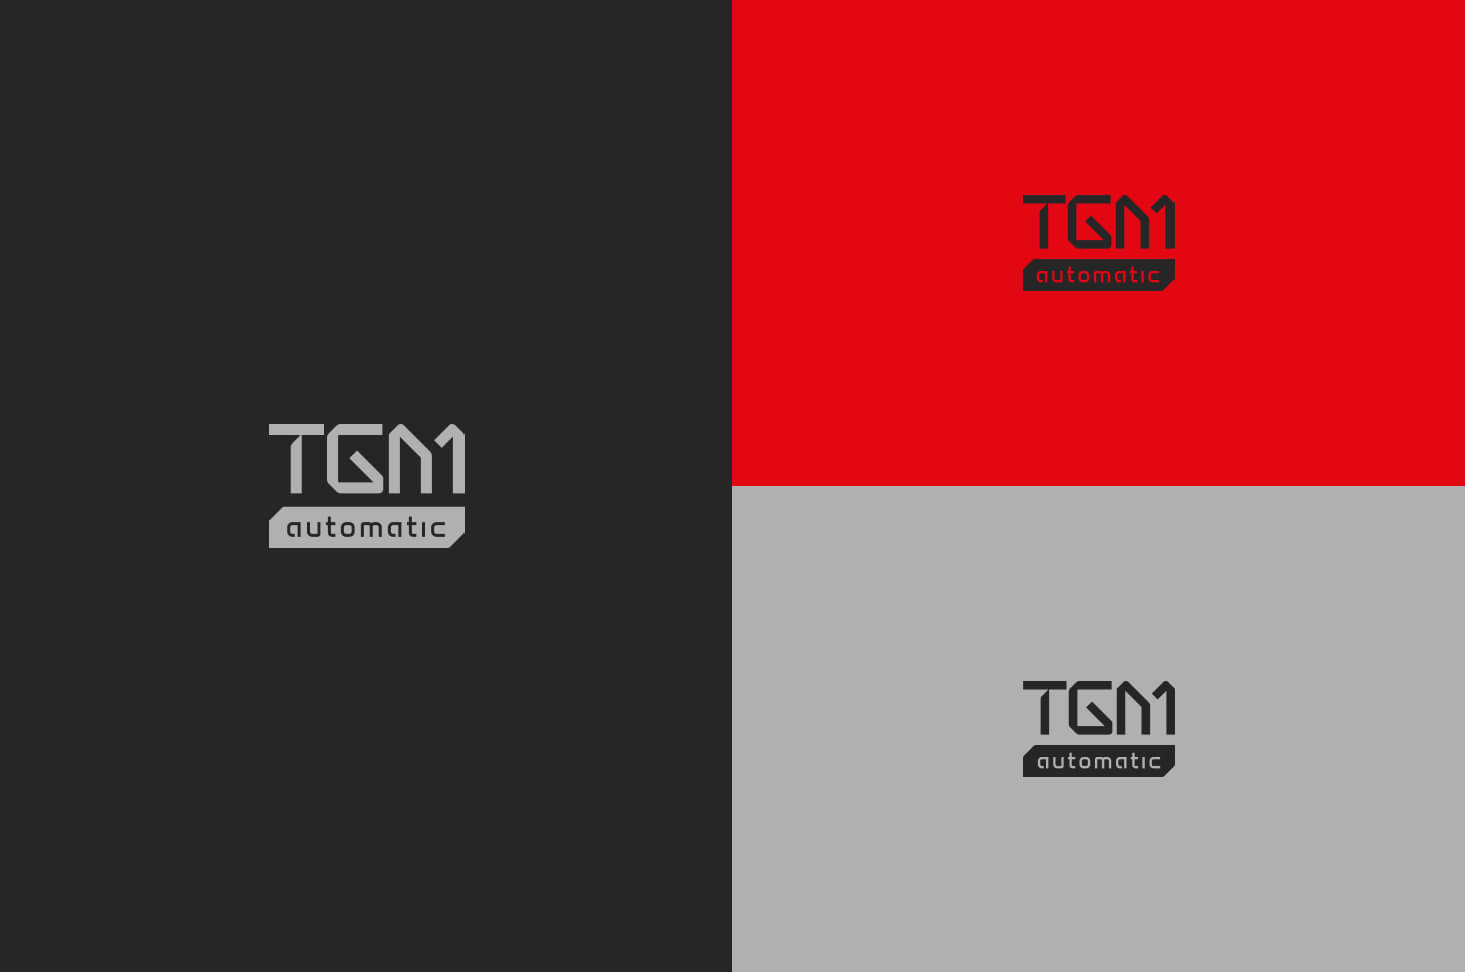 tgm-automatic-logo3.jpg